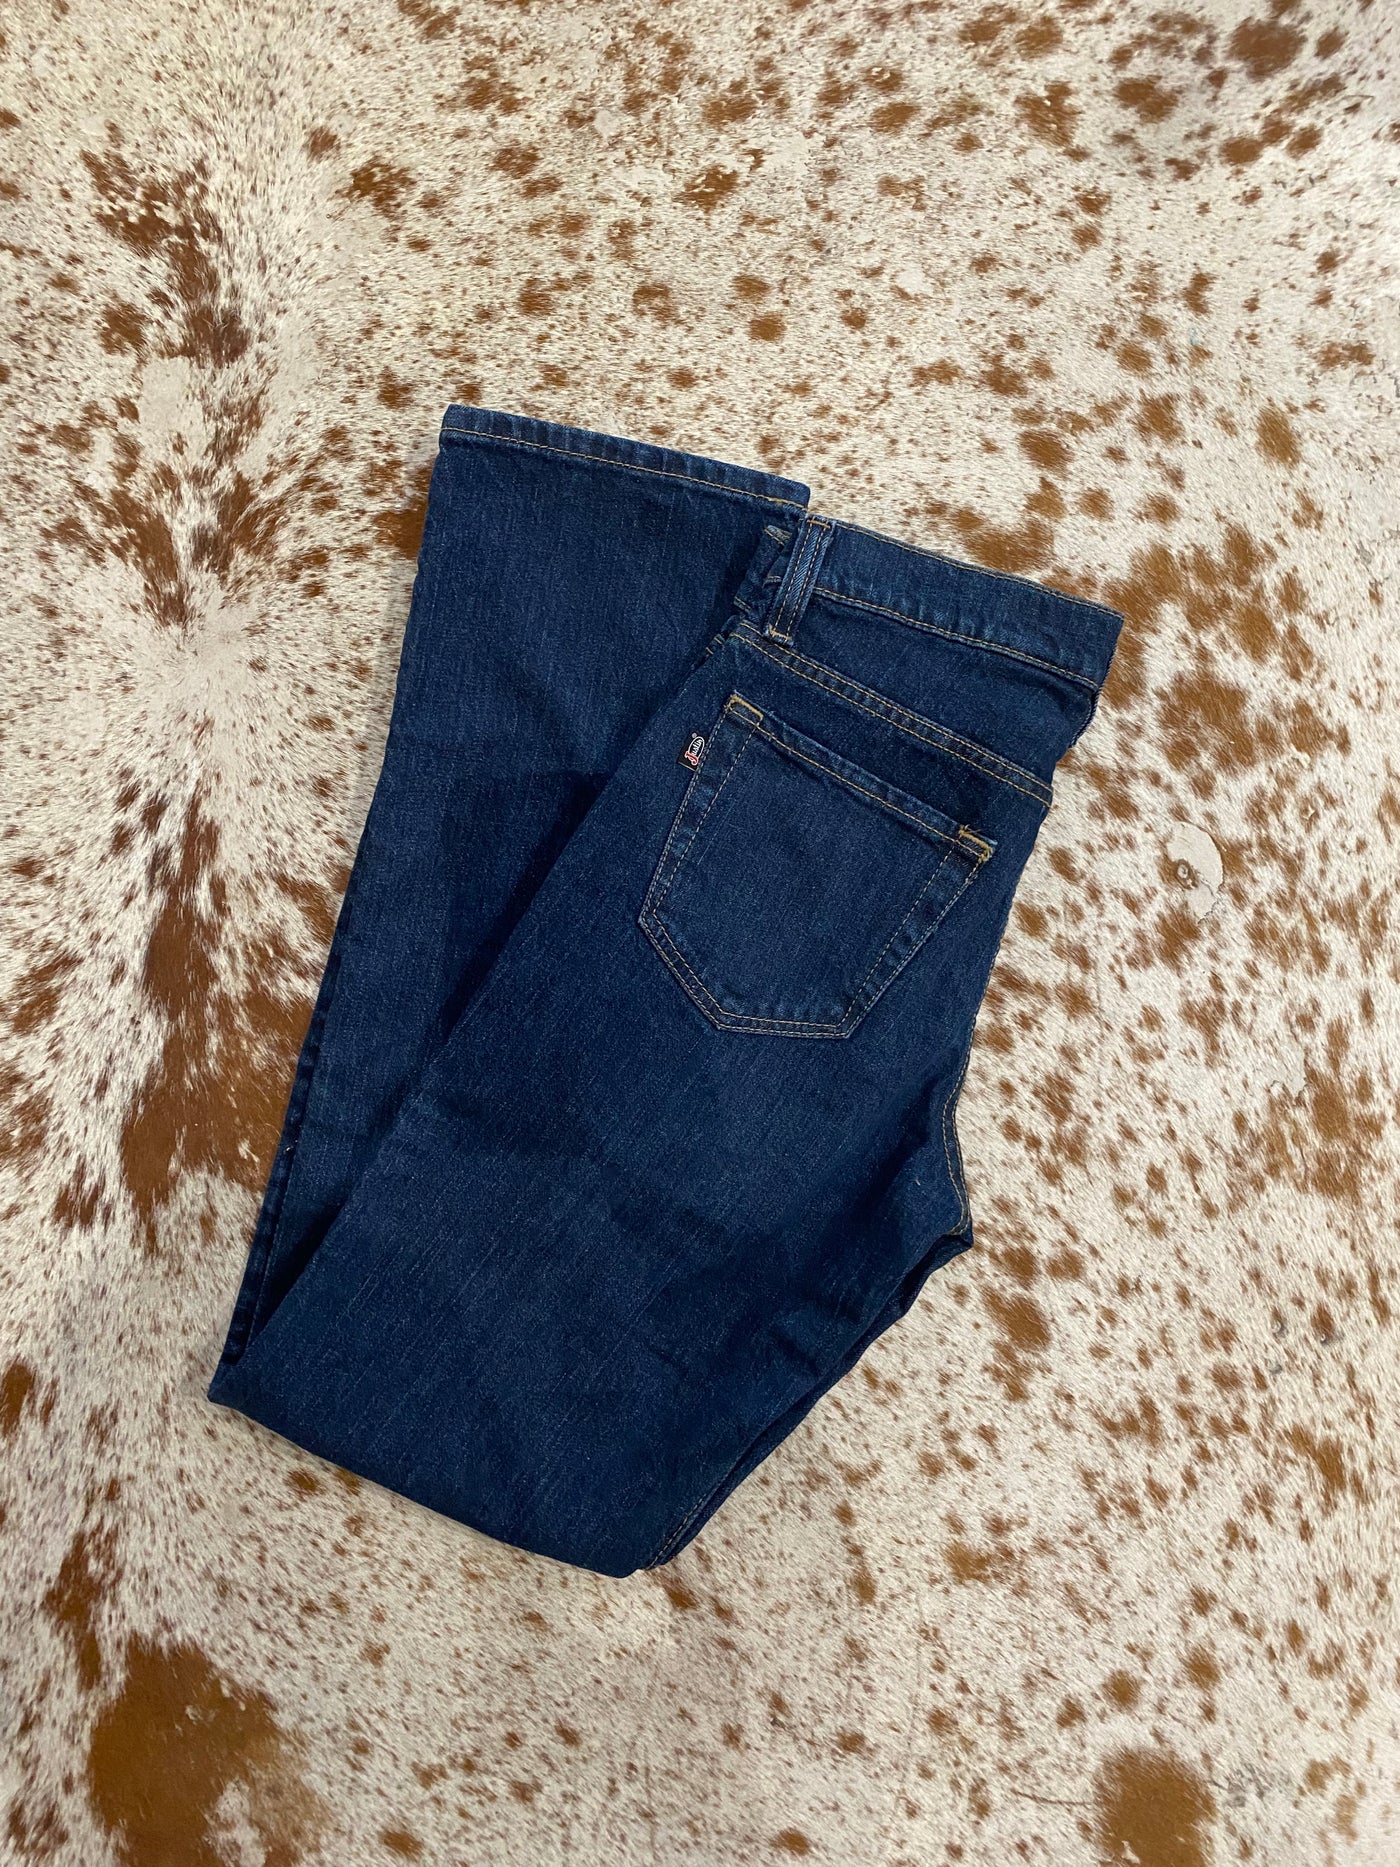 Justin J2 1879 Denim Men's Dark Wash Slim Straight Jeans